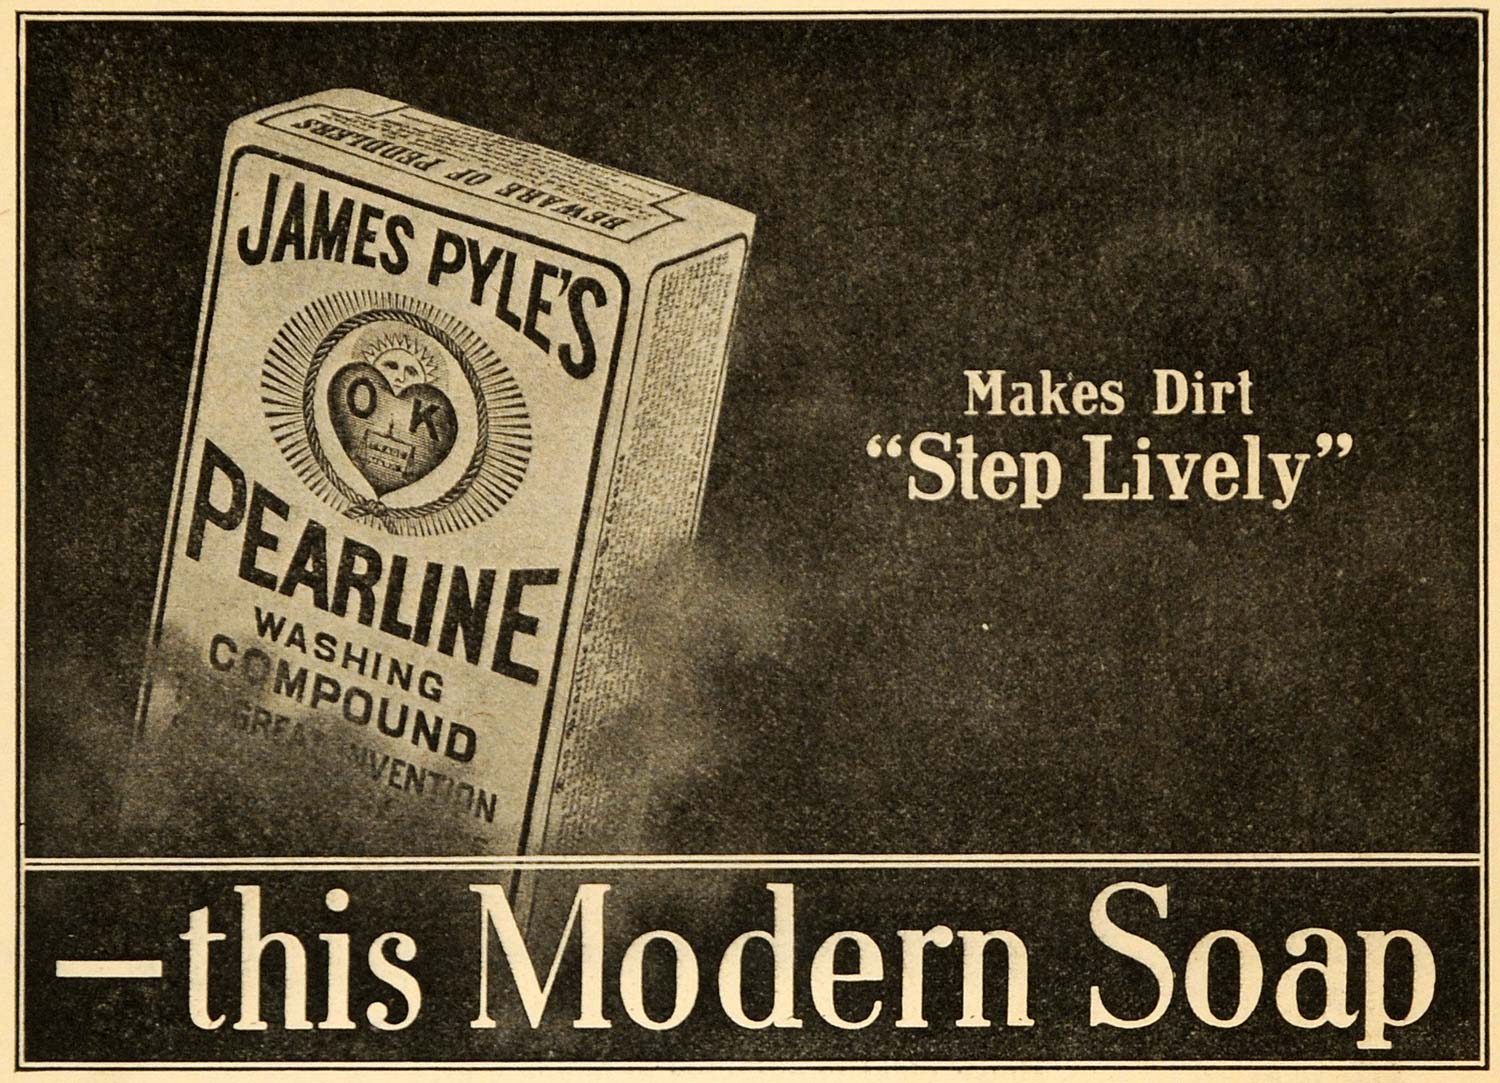 1905 Ad James Pyle Pearline Washing Compound Soap Box - ORIGINAL ARG1